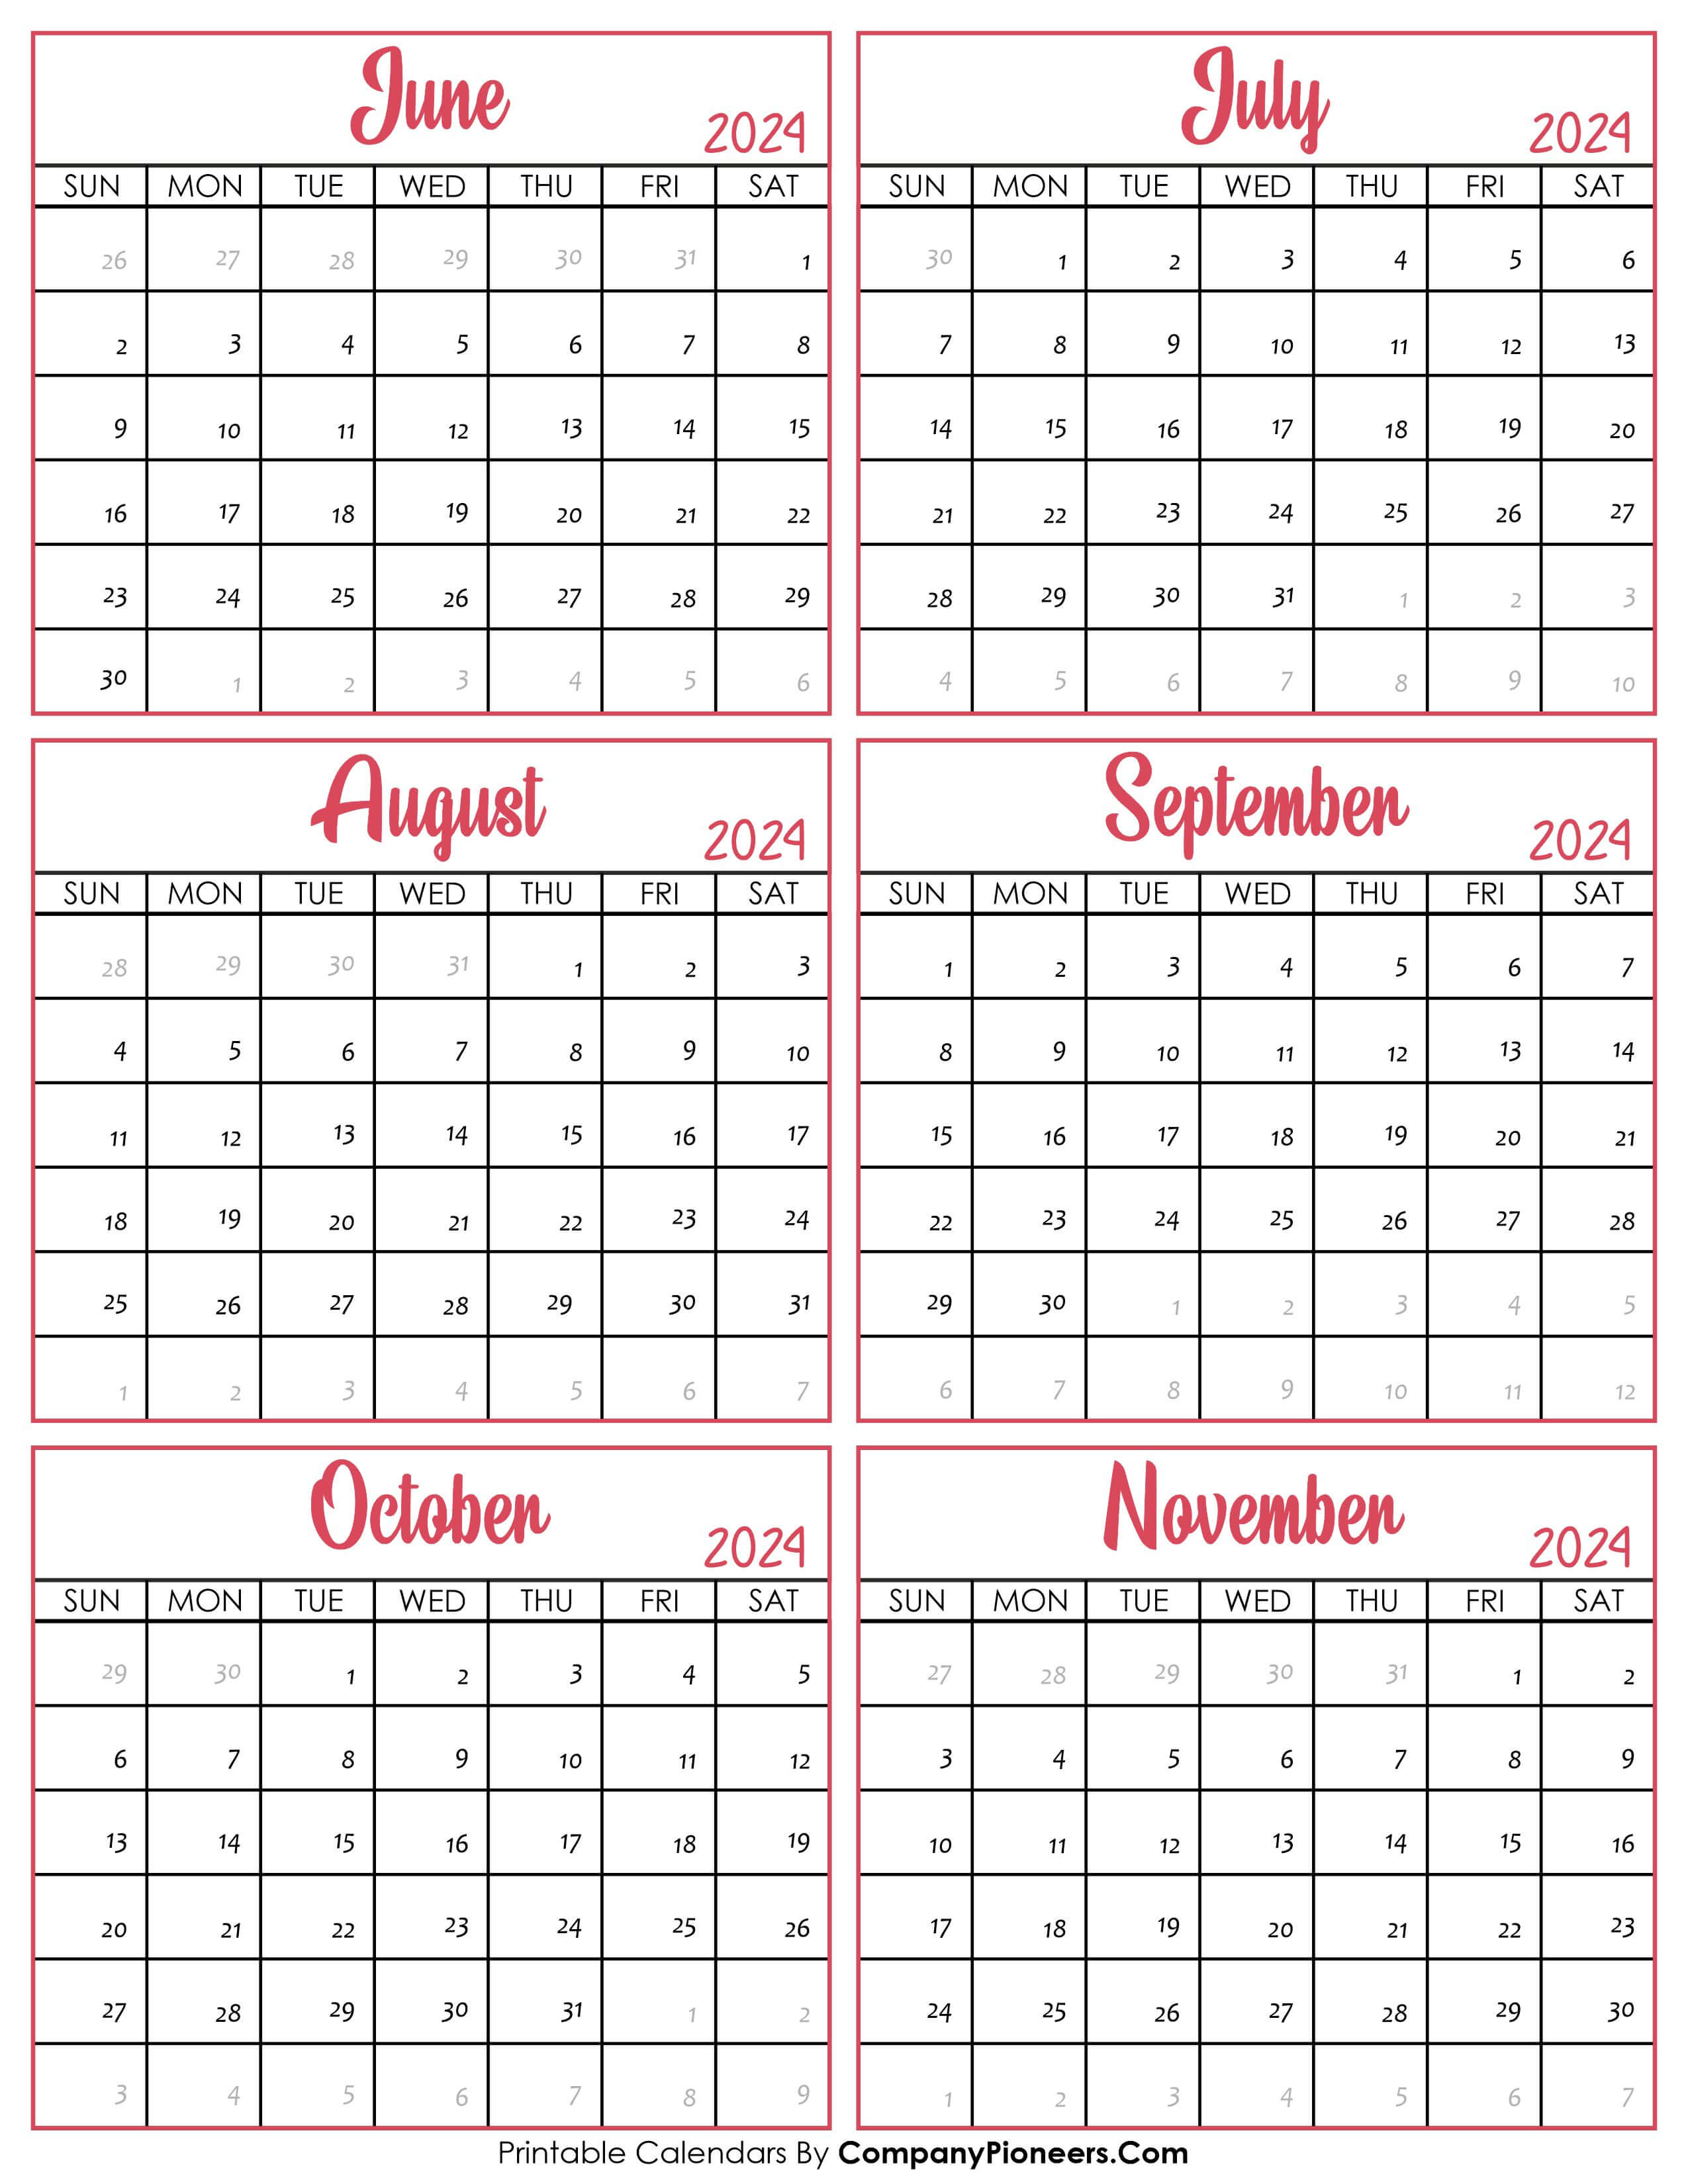 Calendar June to November 2024